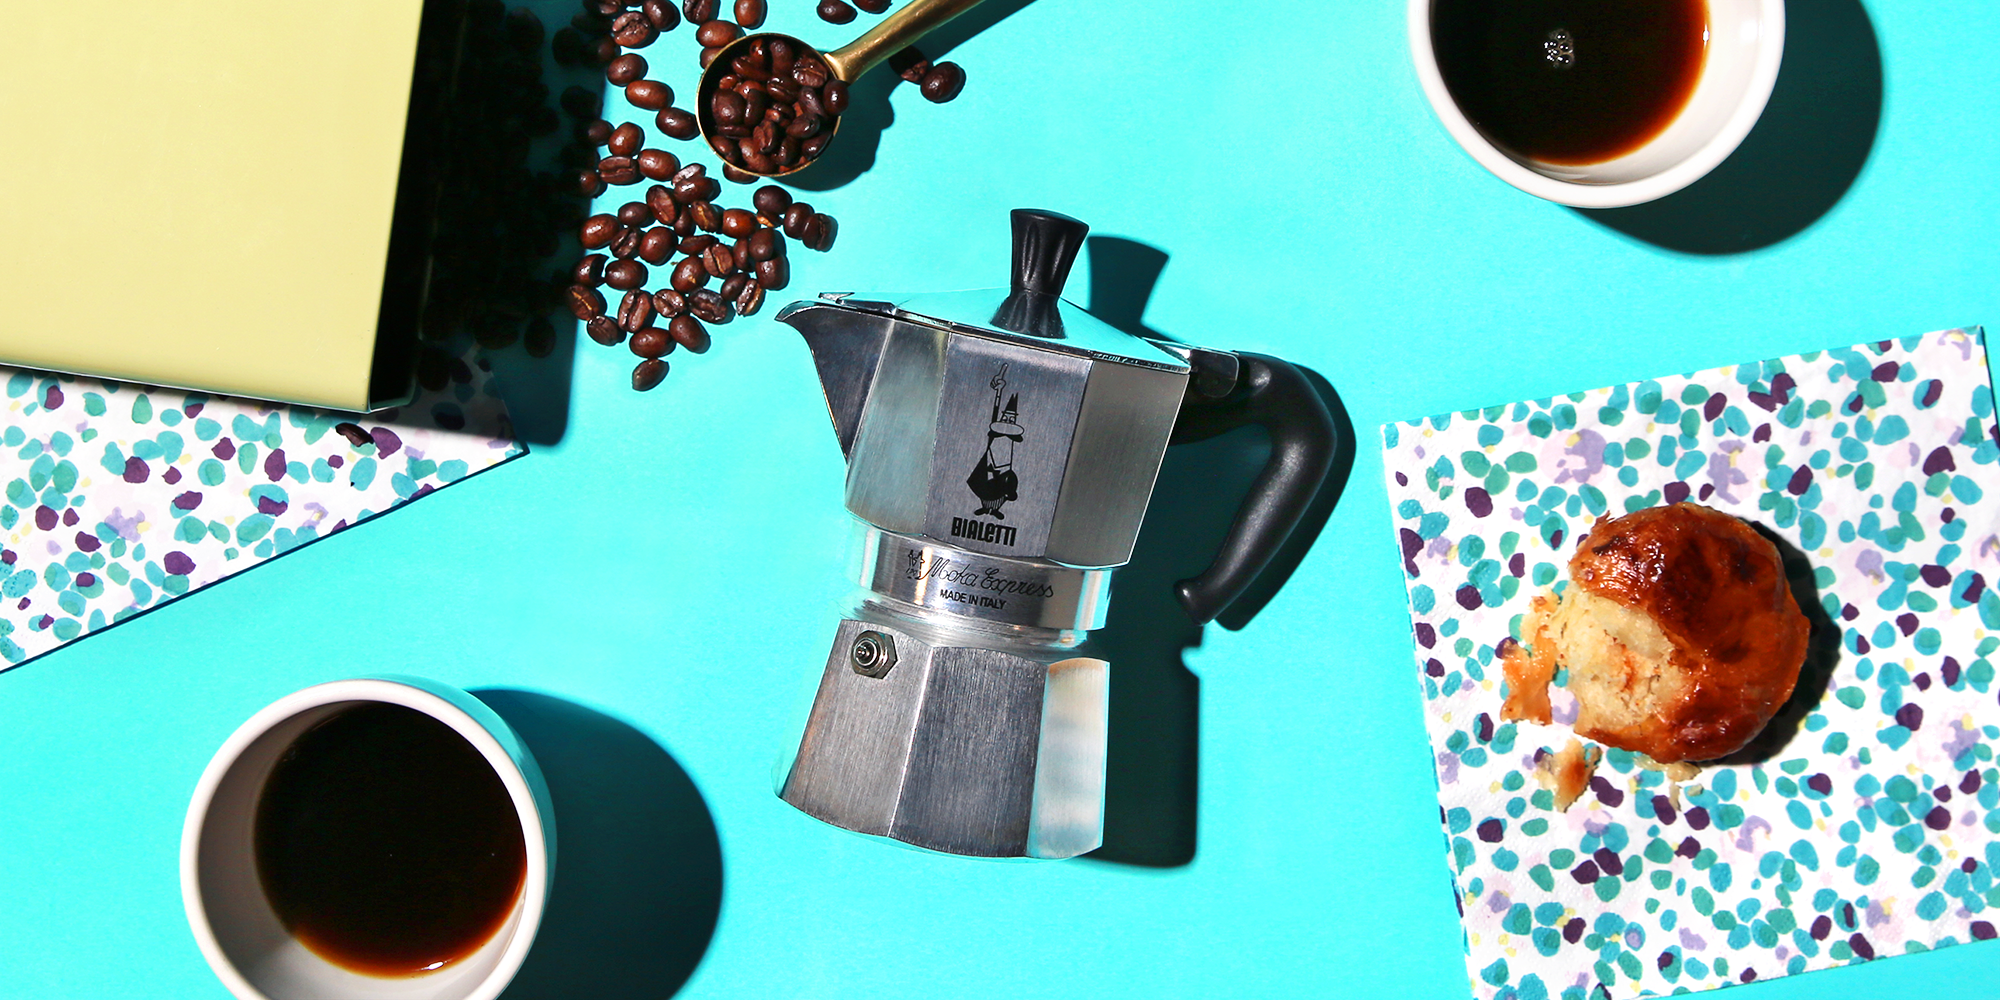 Bialetti Moka Pot Stovetop Espresso Maker Review 2020